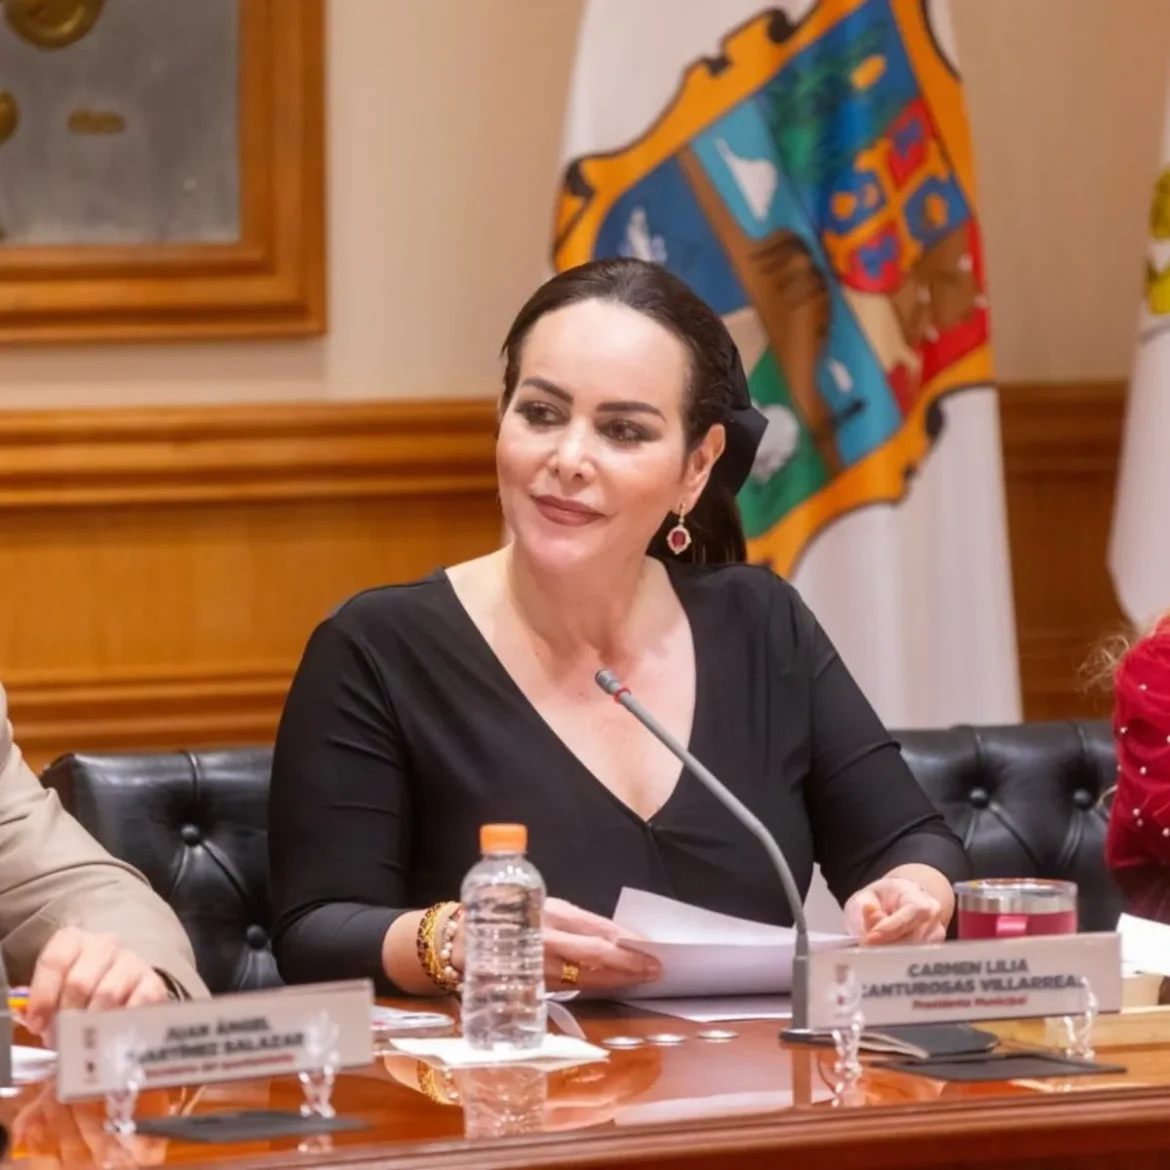 Carmen Lilia Canturosas es la alcaldesa mejor calificada de México